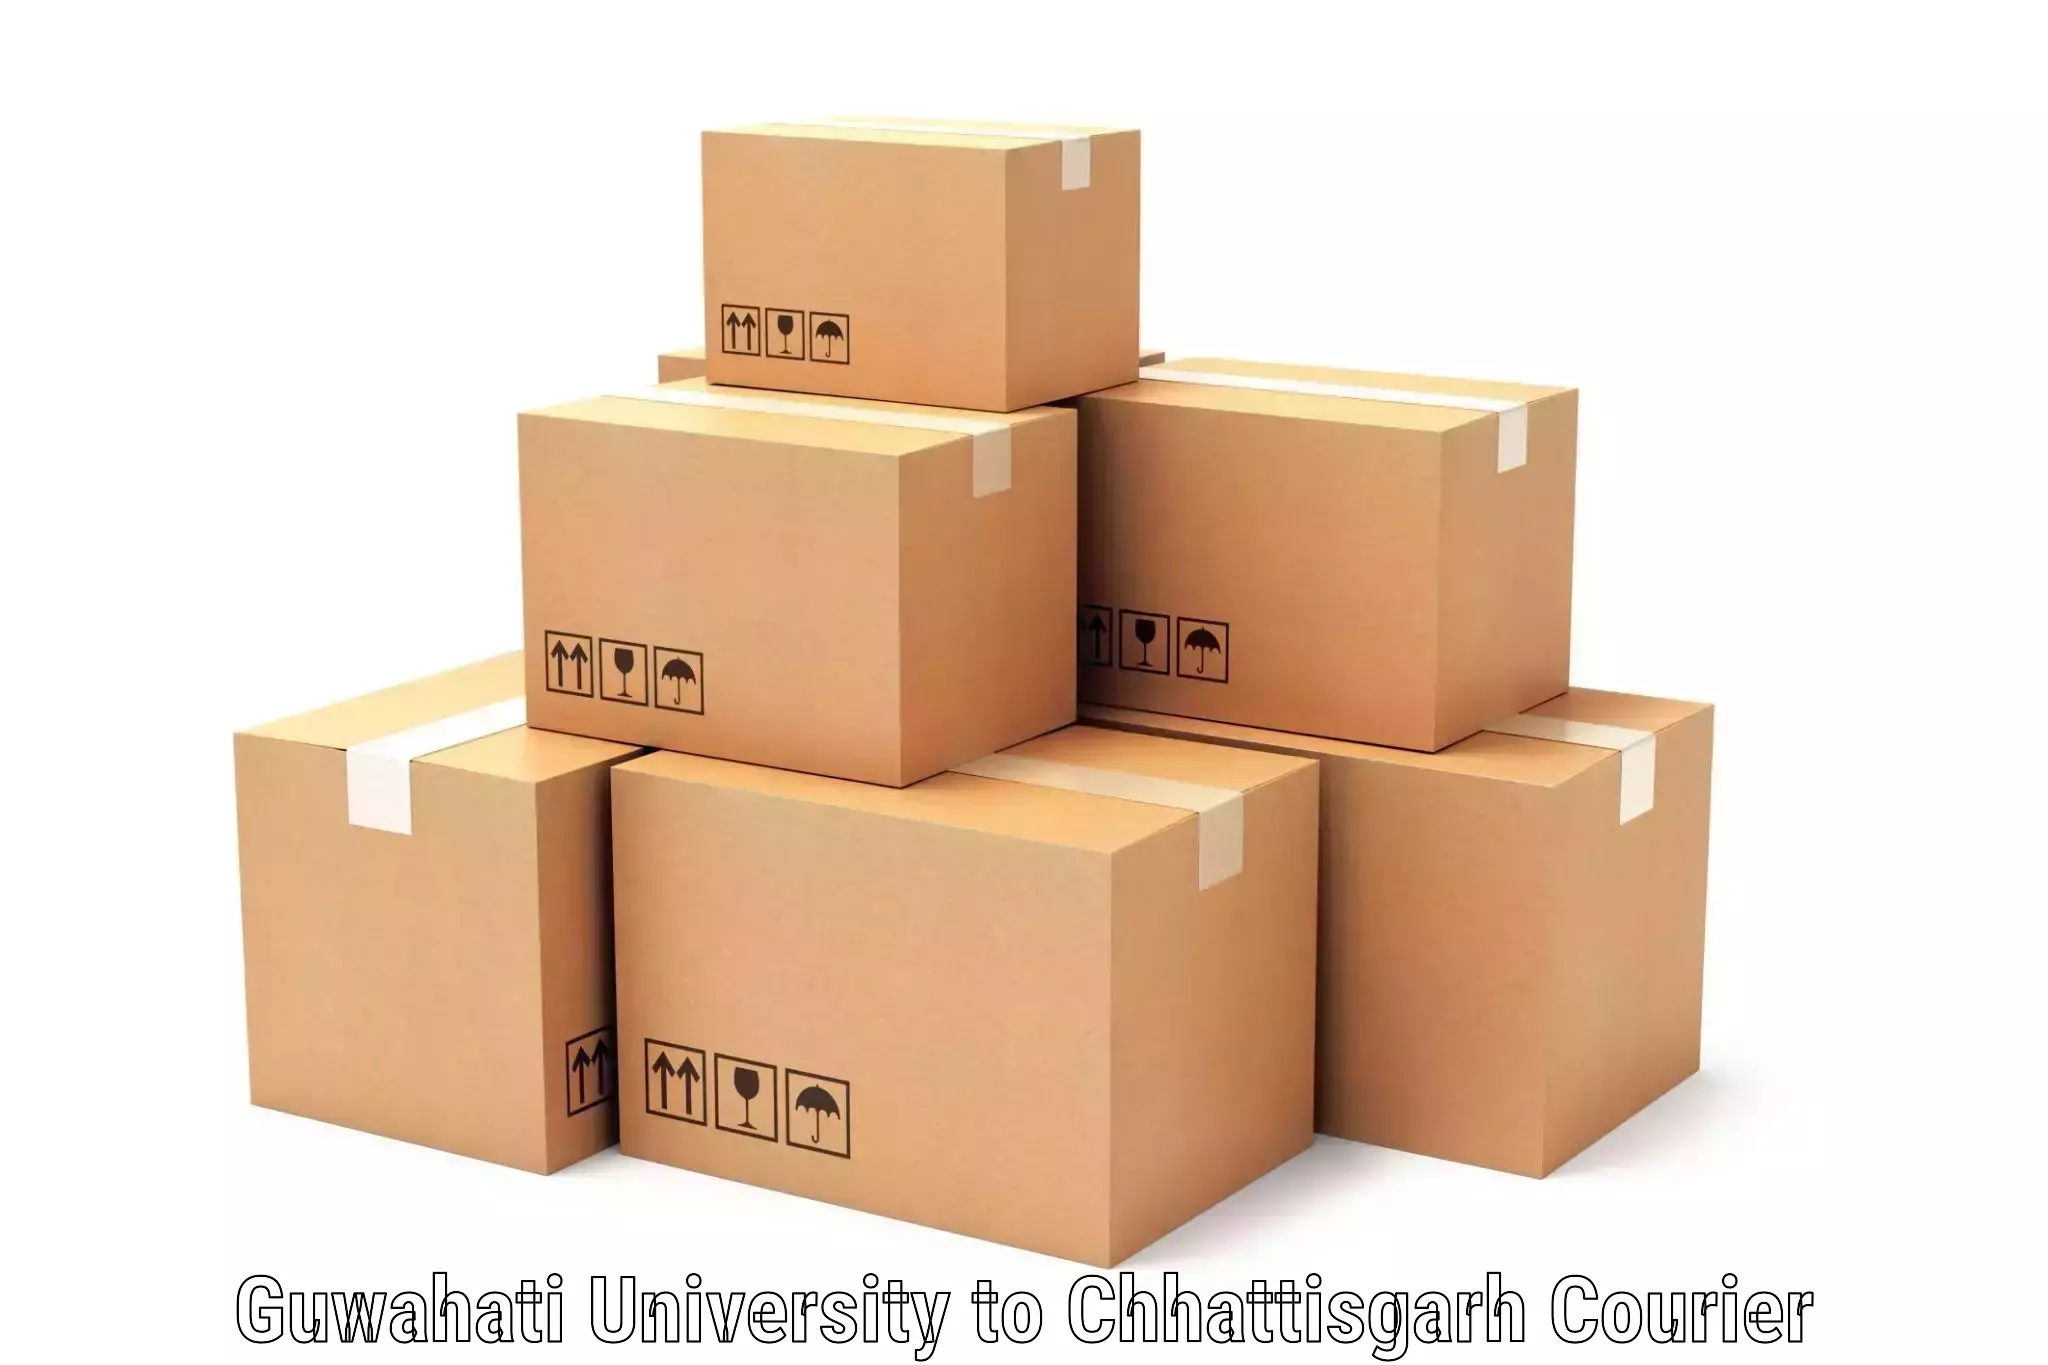 Cash on delivery service Guwahati University to Chhattisgarh